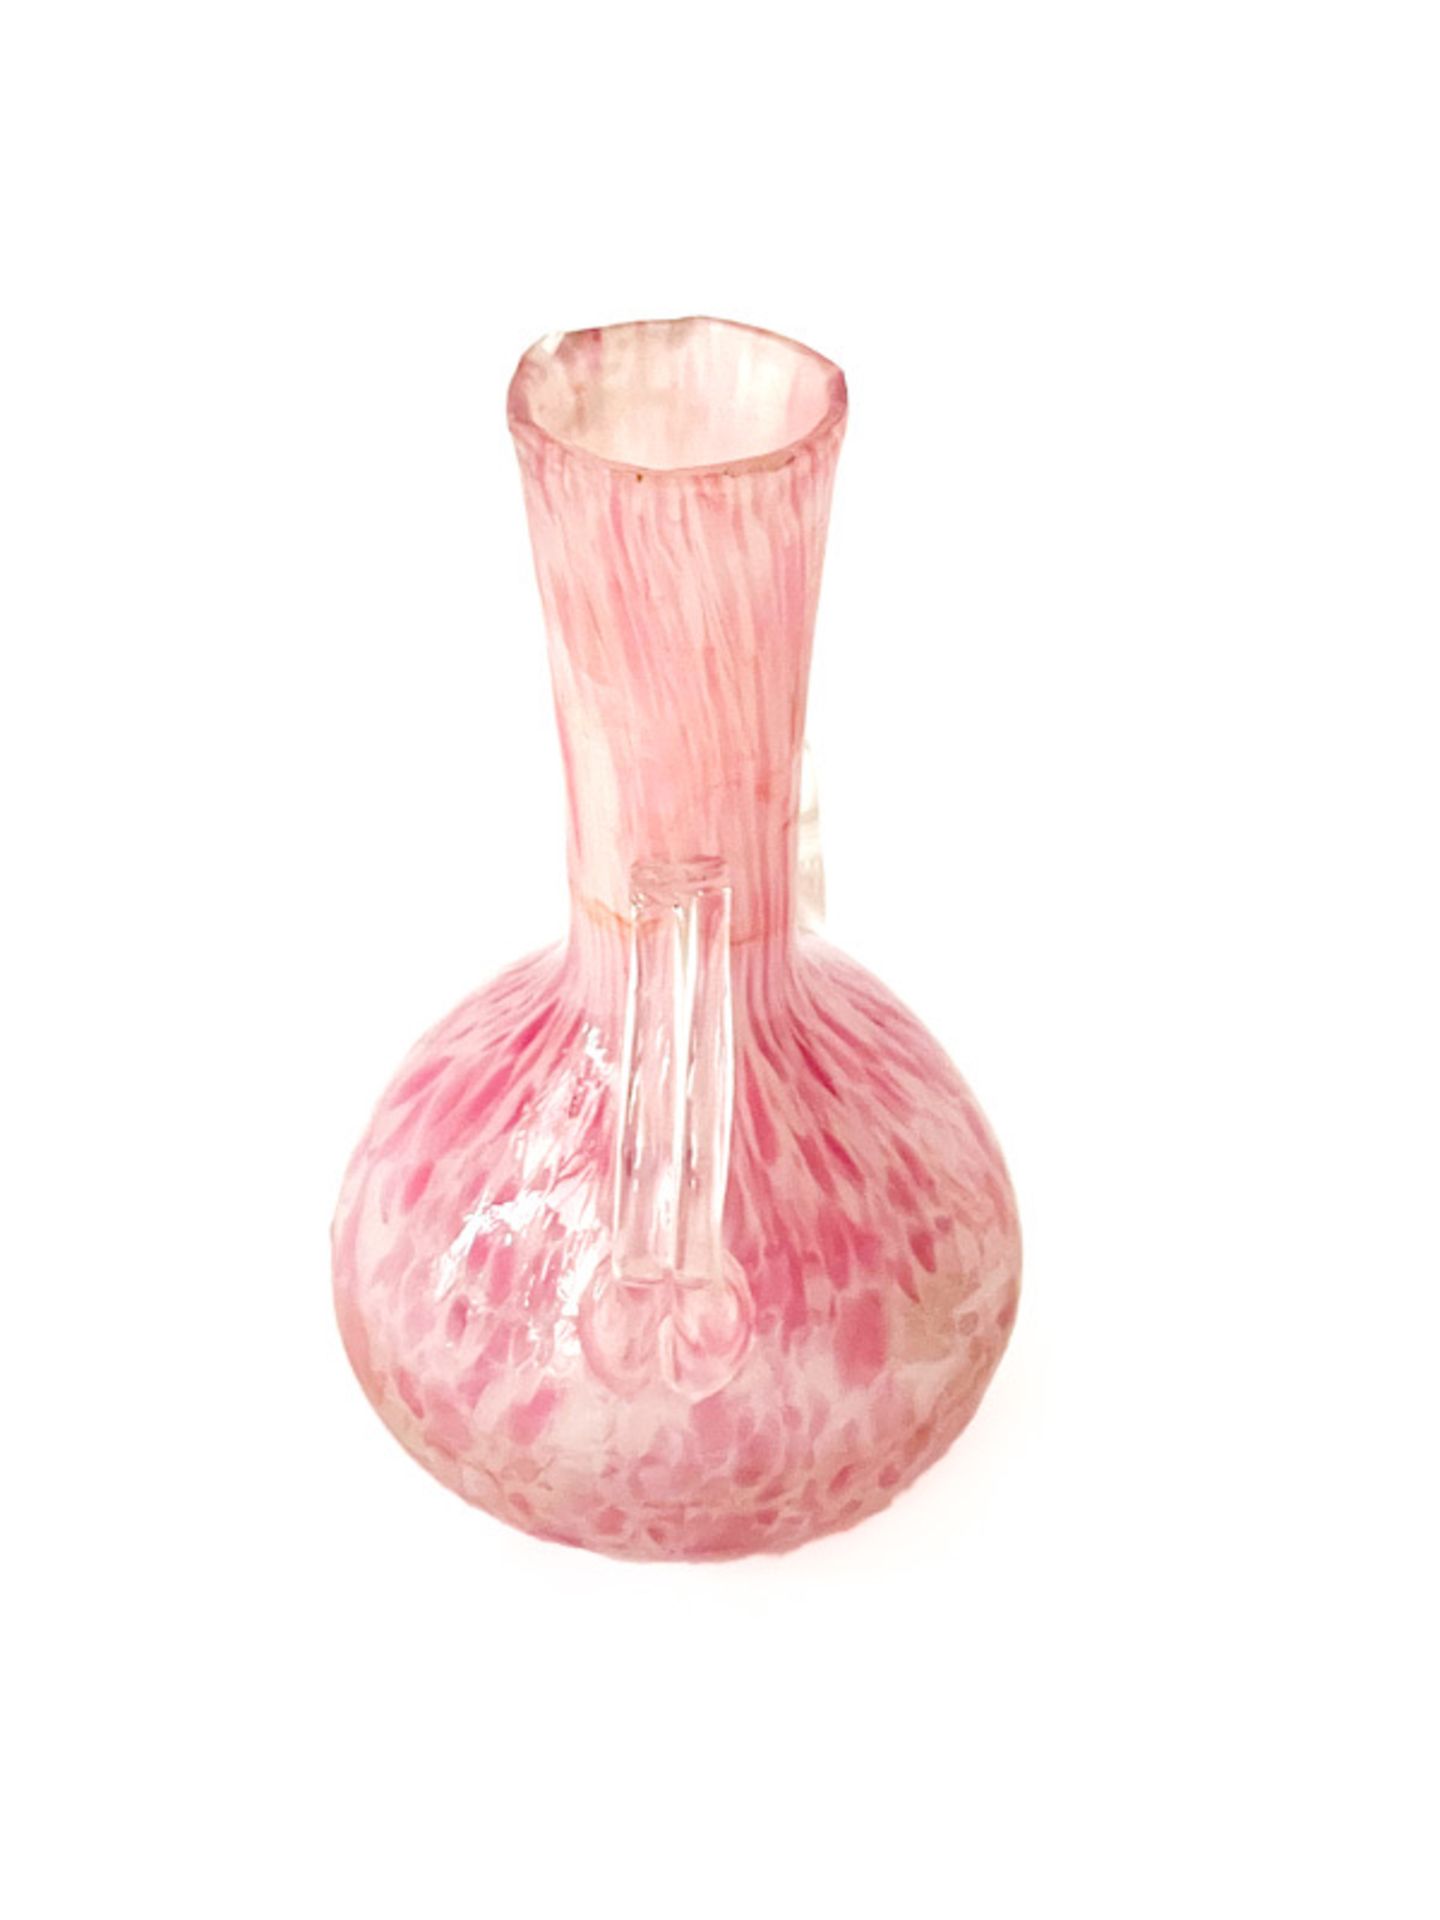 Schöne rosafarbene Glasvase - Image 2 of 3